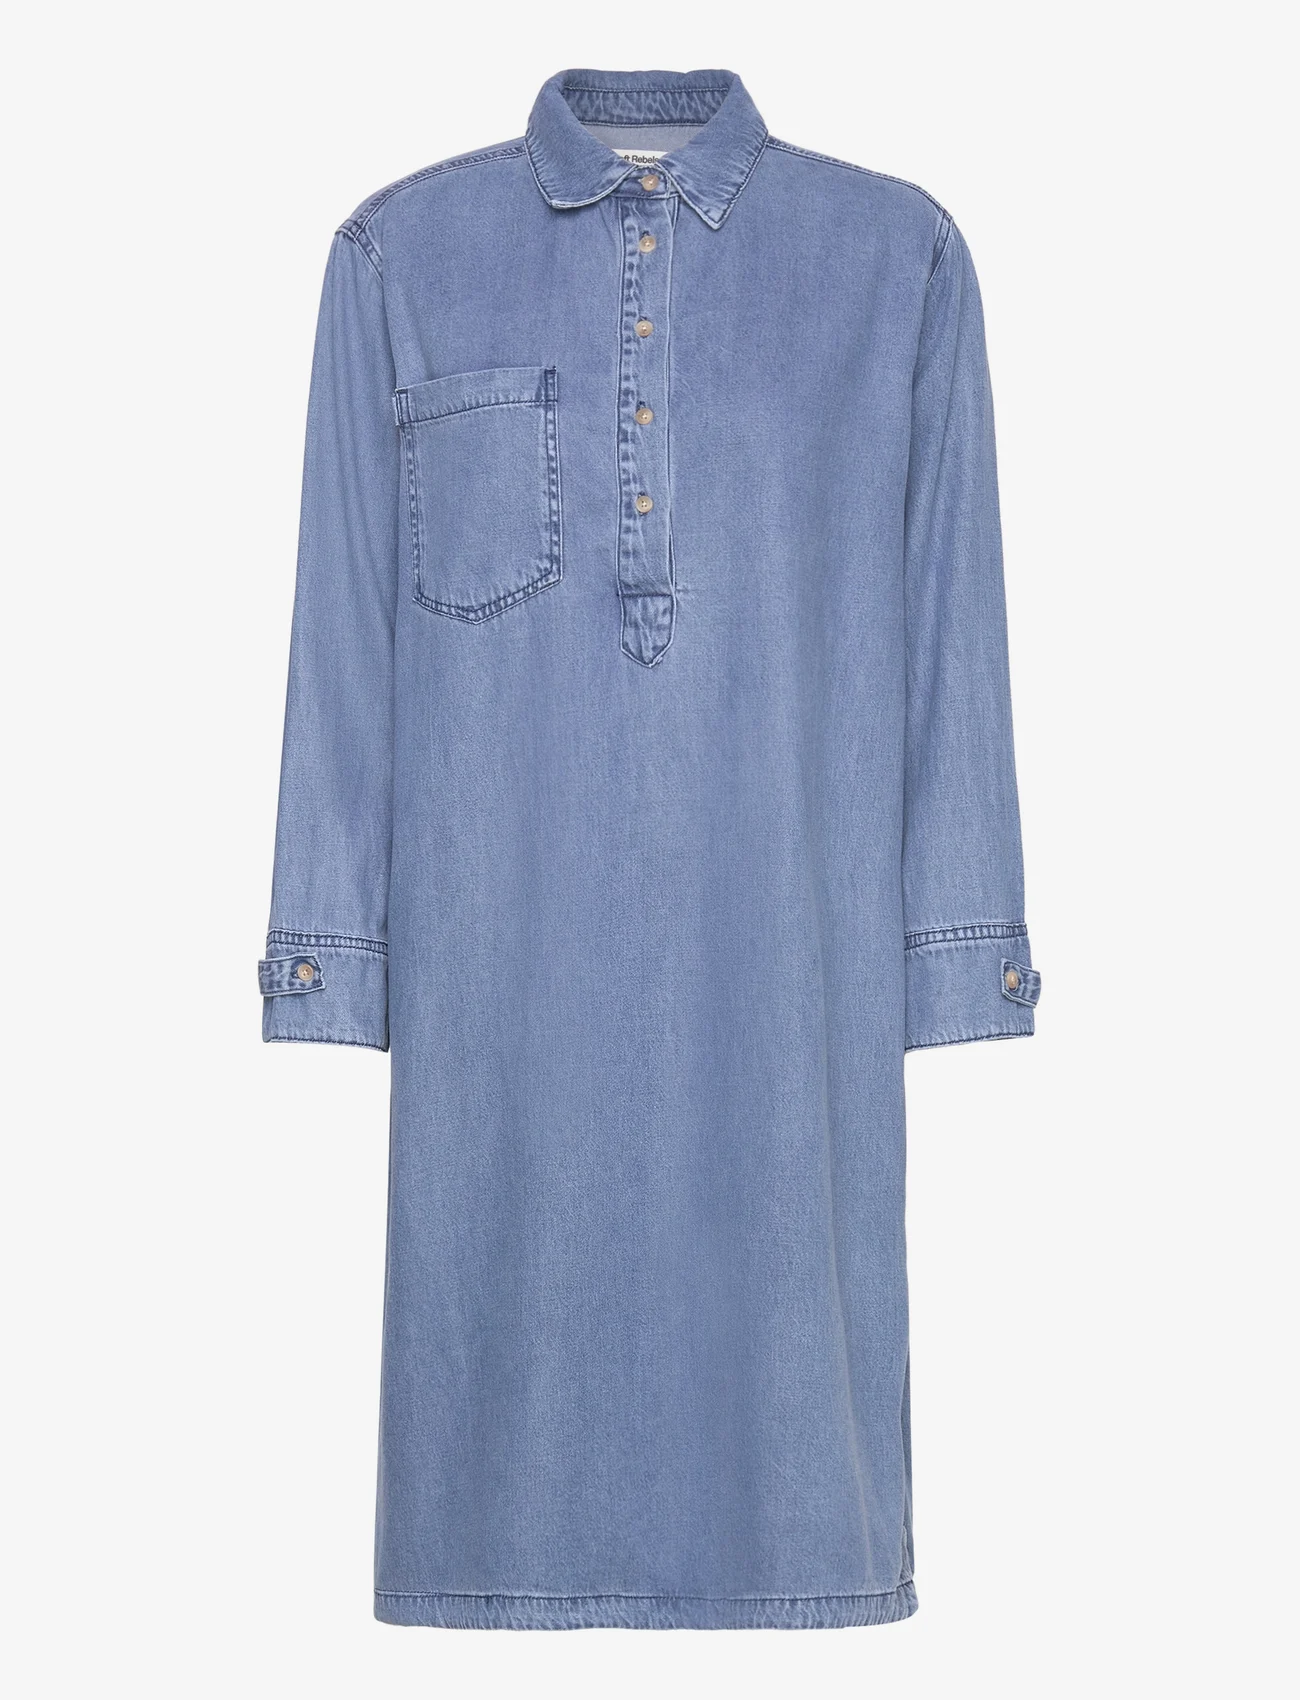 Soft Rebels - SRLila Midi Dress - midi jurken - medium blue wash - 0